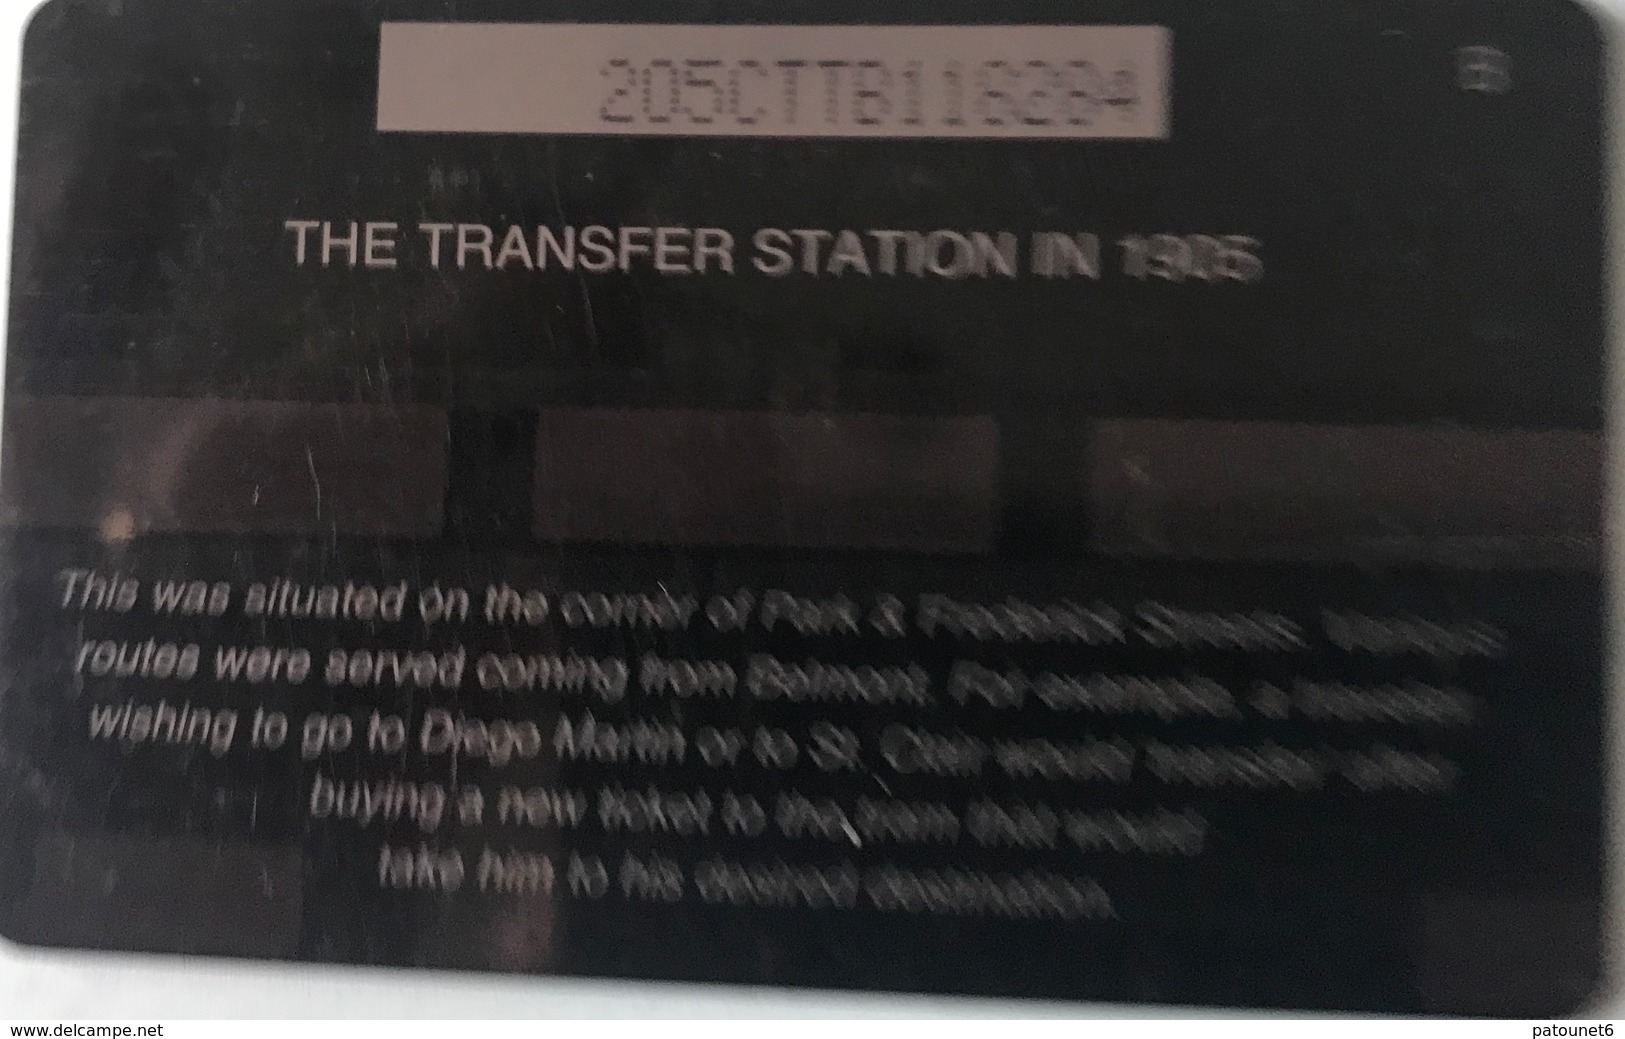 TRINITE & TOBAGO  -  Phonecard  - TSTT  -  The Transfer Station In 1905  -  TT $ 20 - Trinité & Tobago